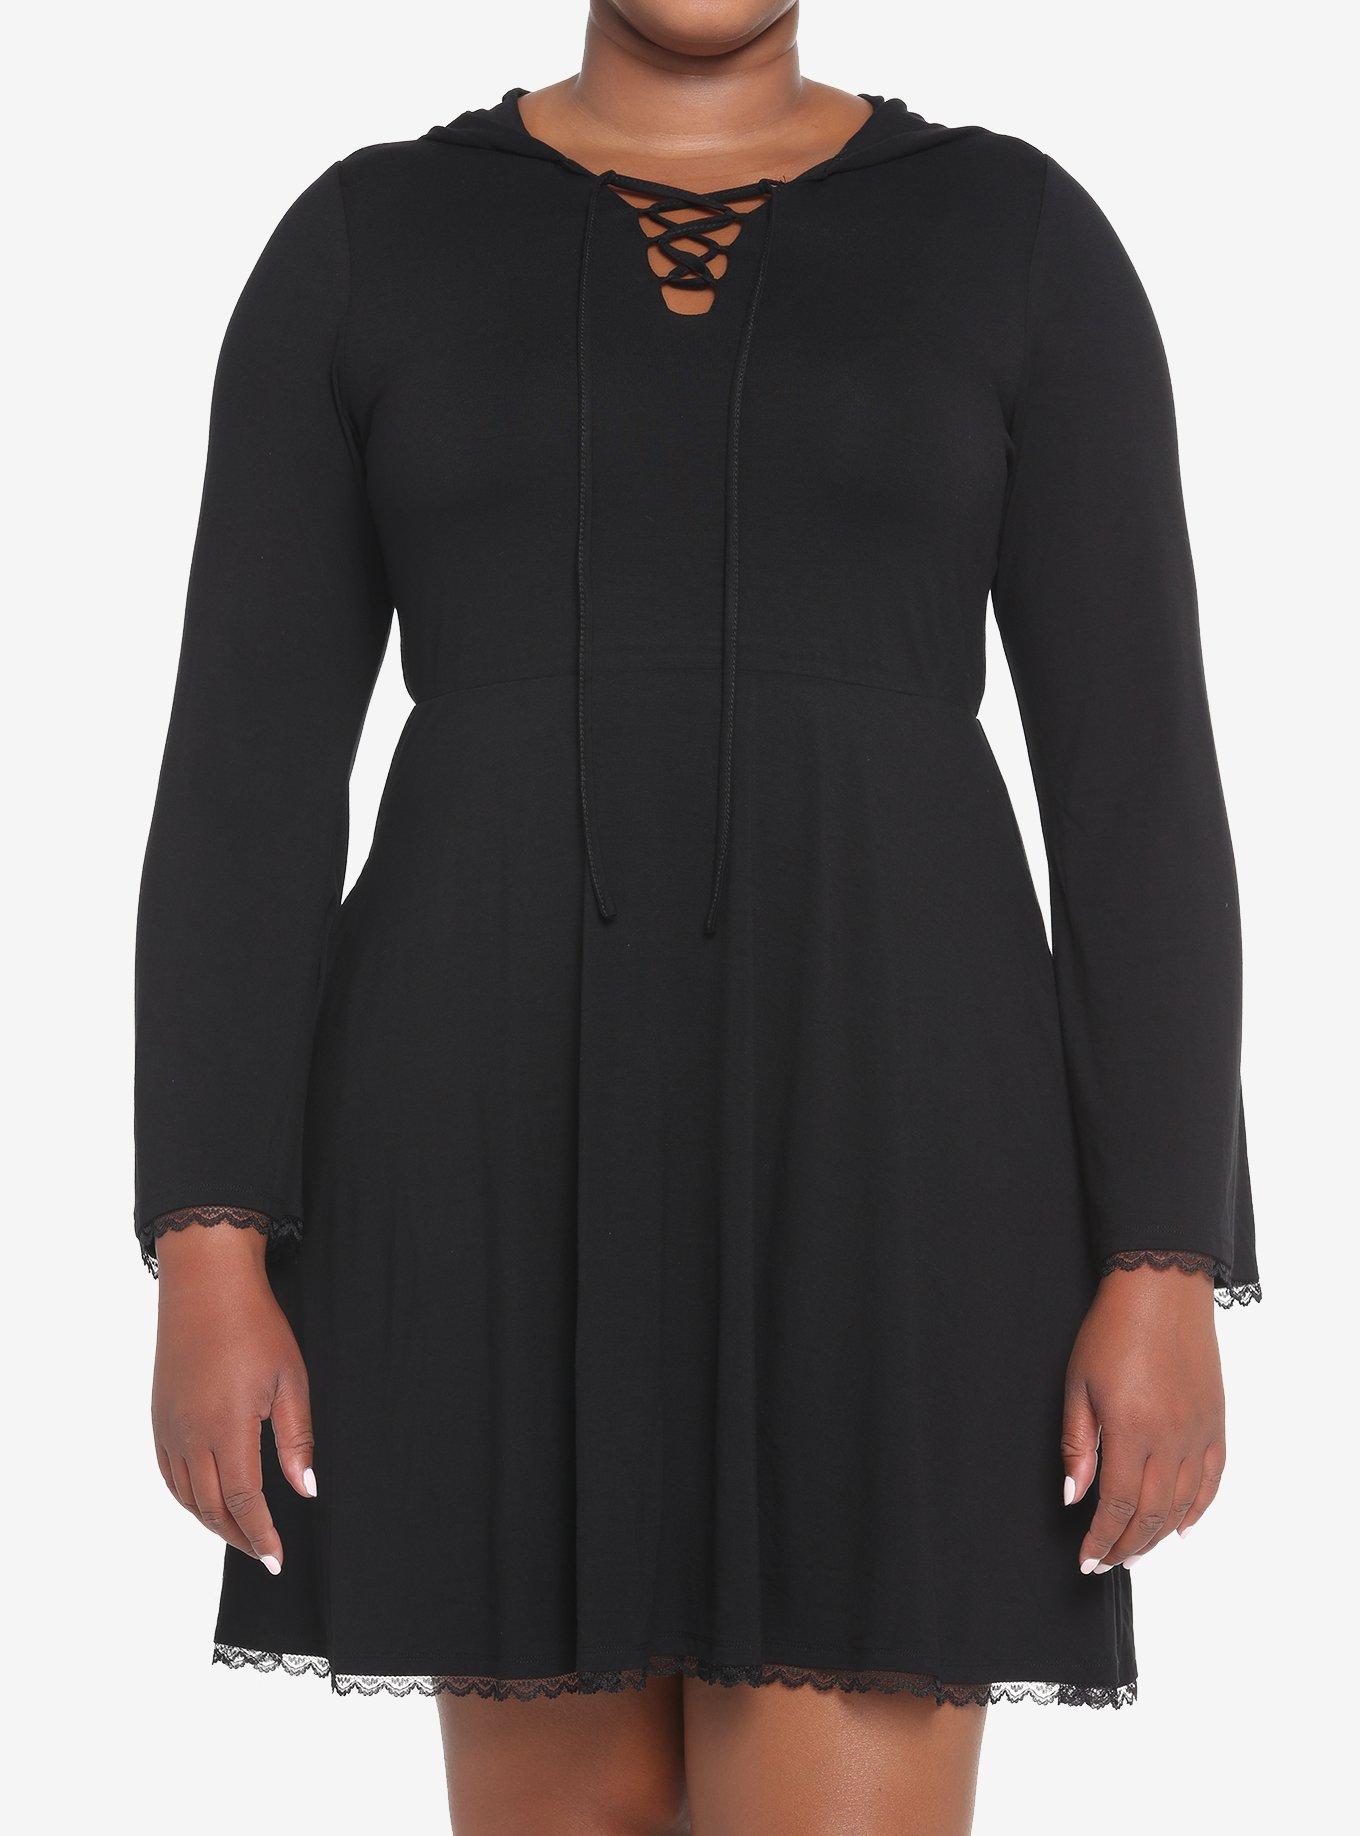 Black Lace-Up Front Hooded Dress Plus Size, BLACK, hi-res